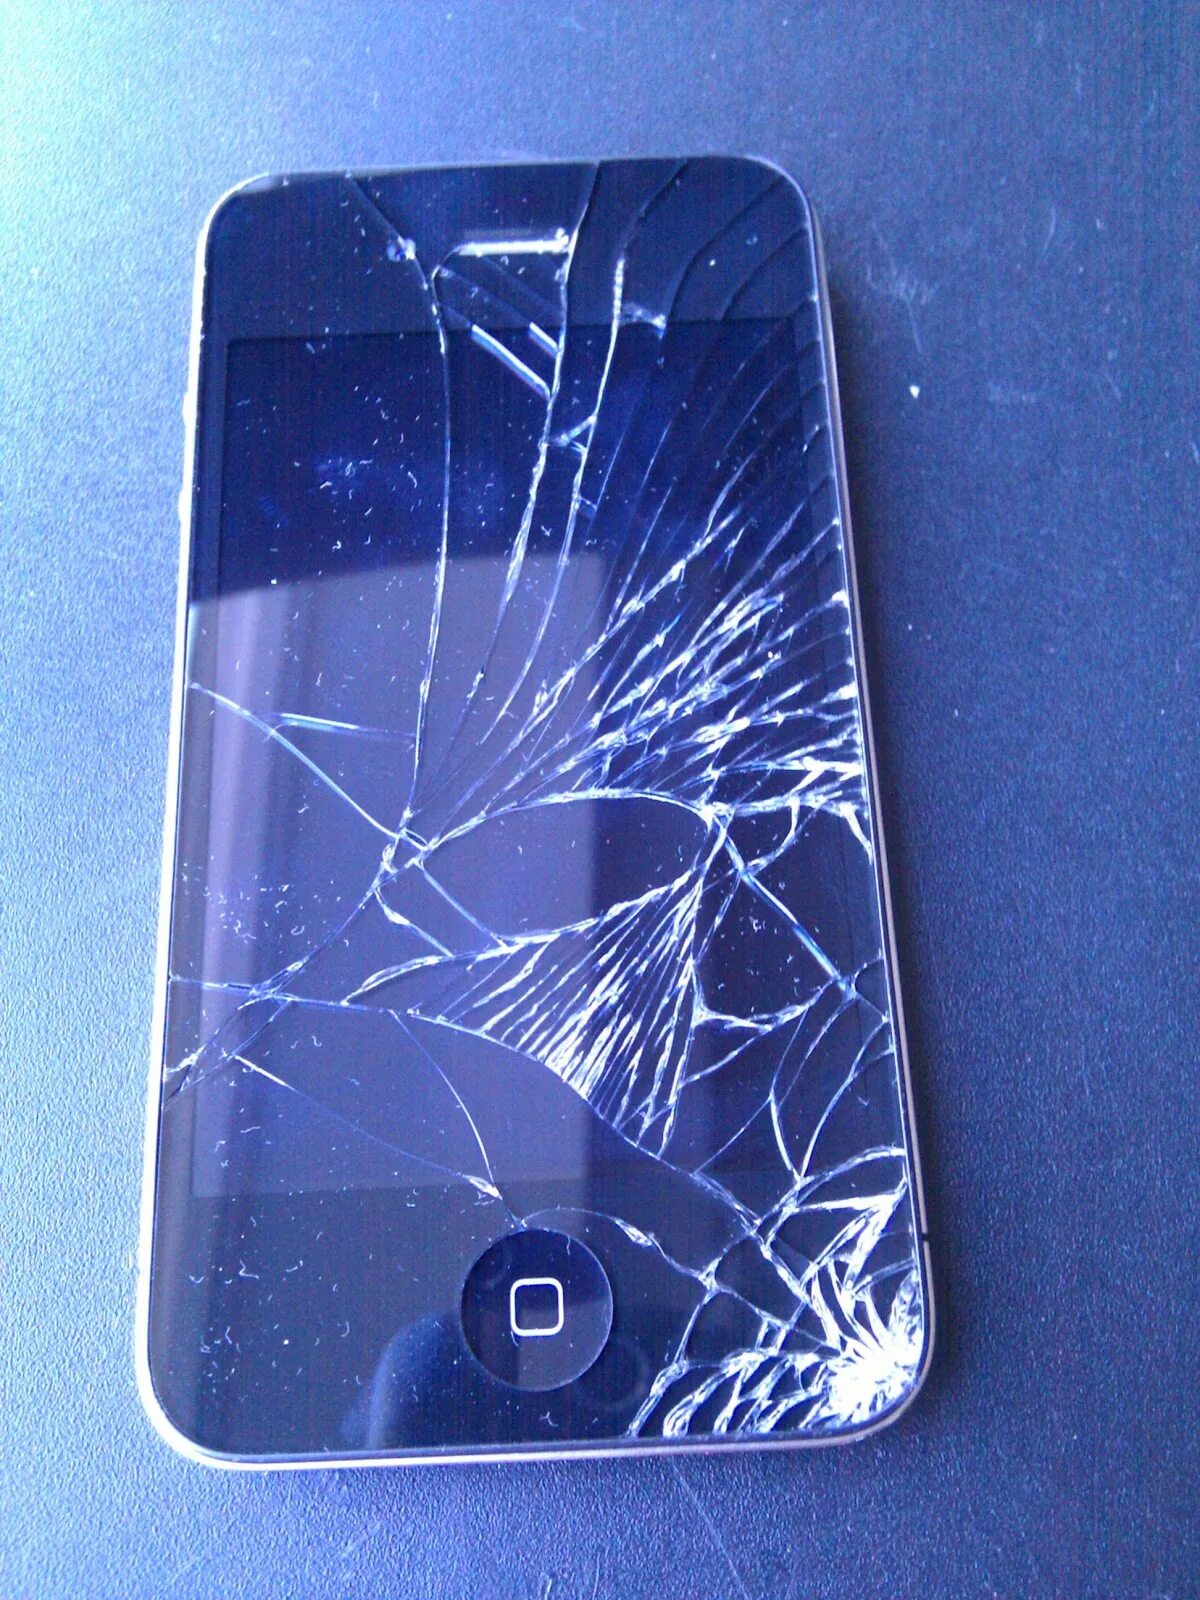 Разбитый айфон 4. Разбитый смартфон. Разбит экран смартфона. Смартфон с разбитым экраном.